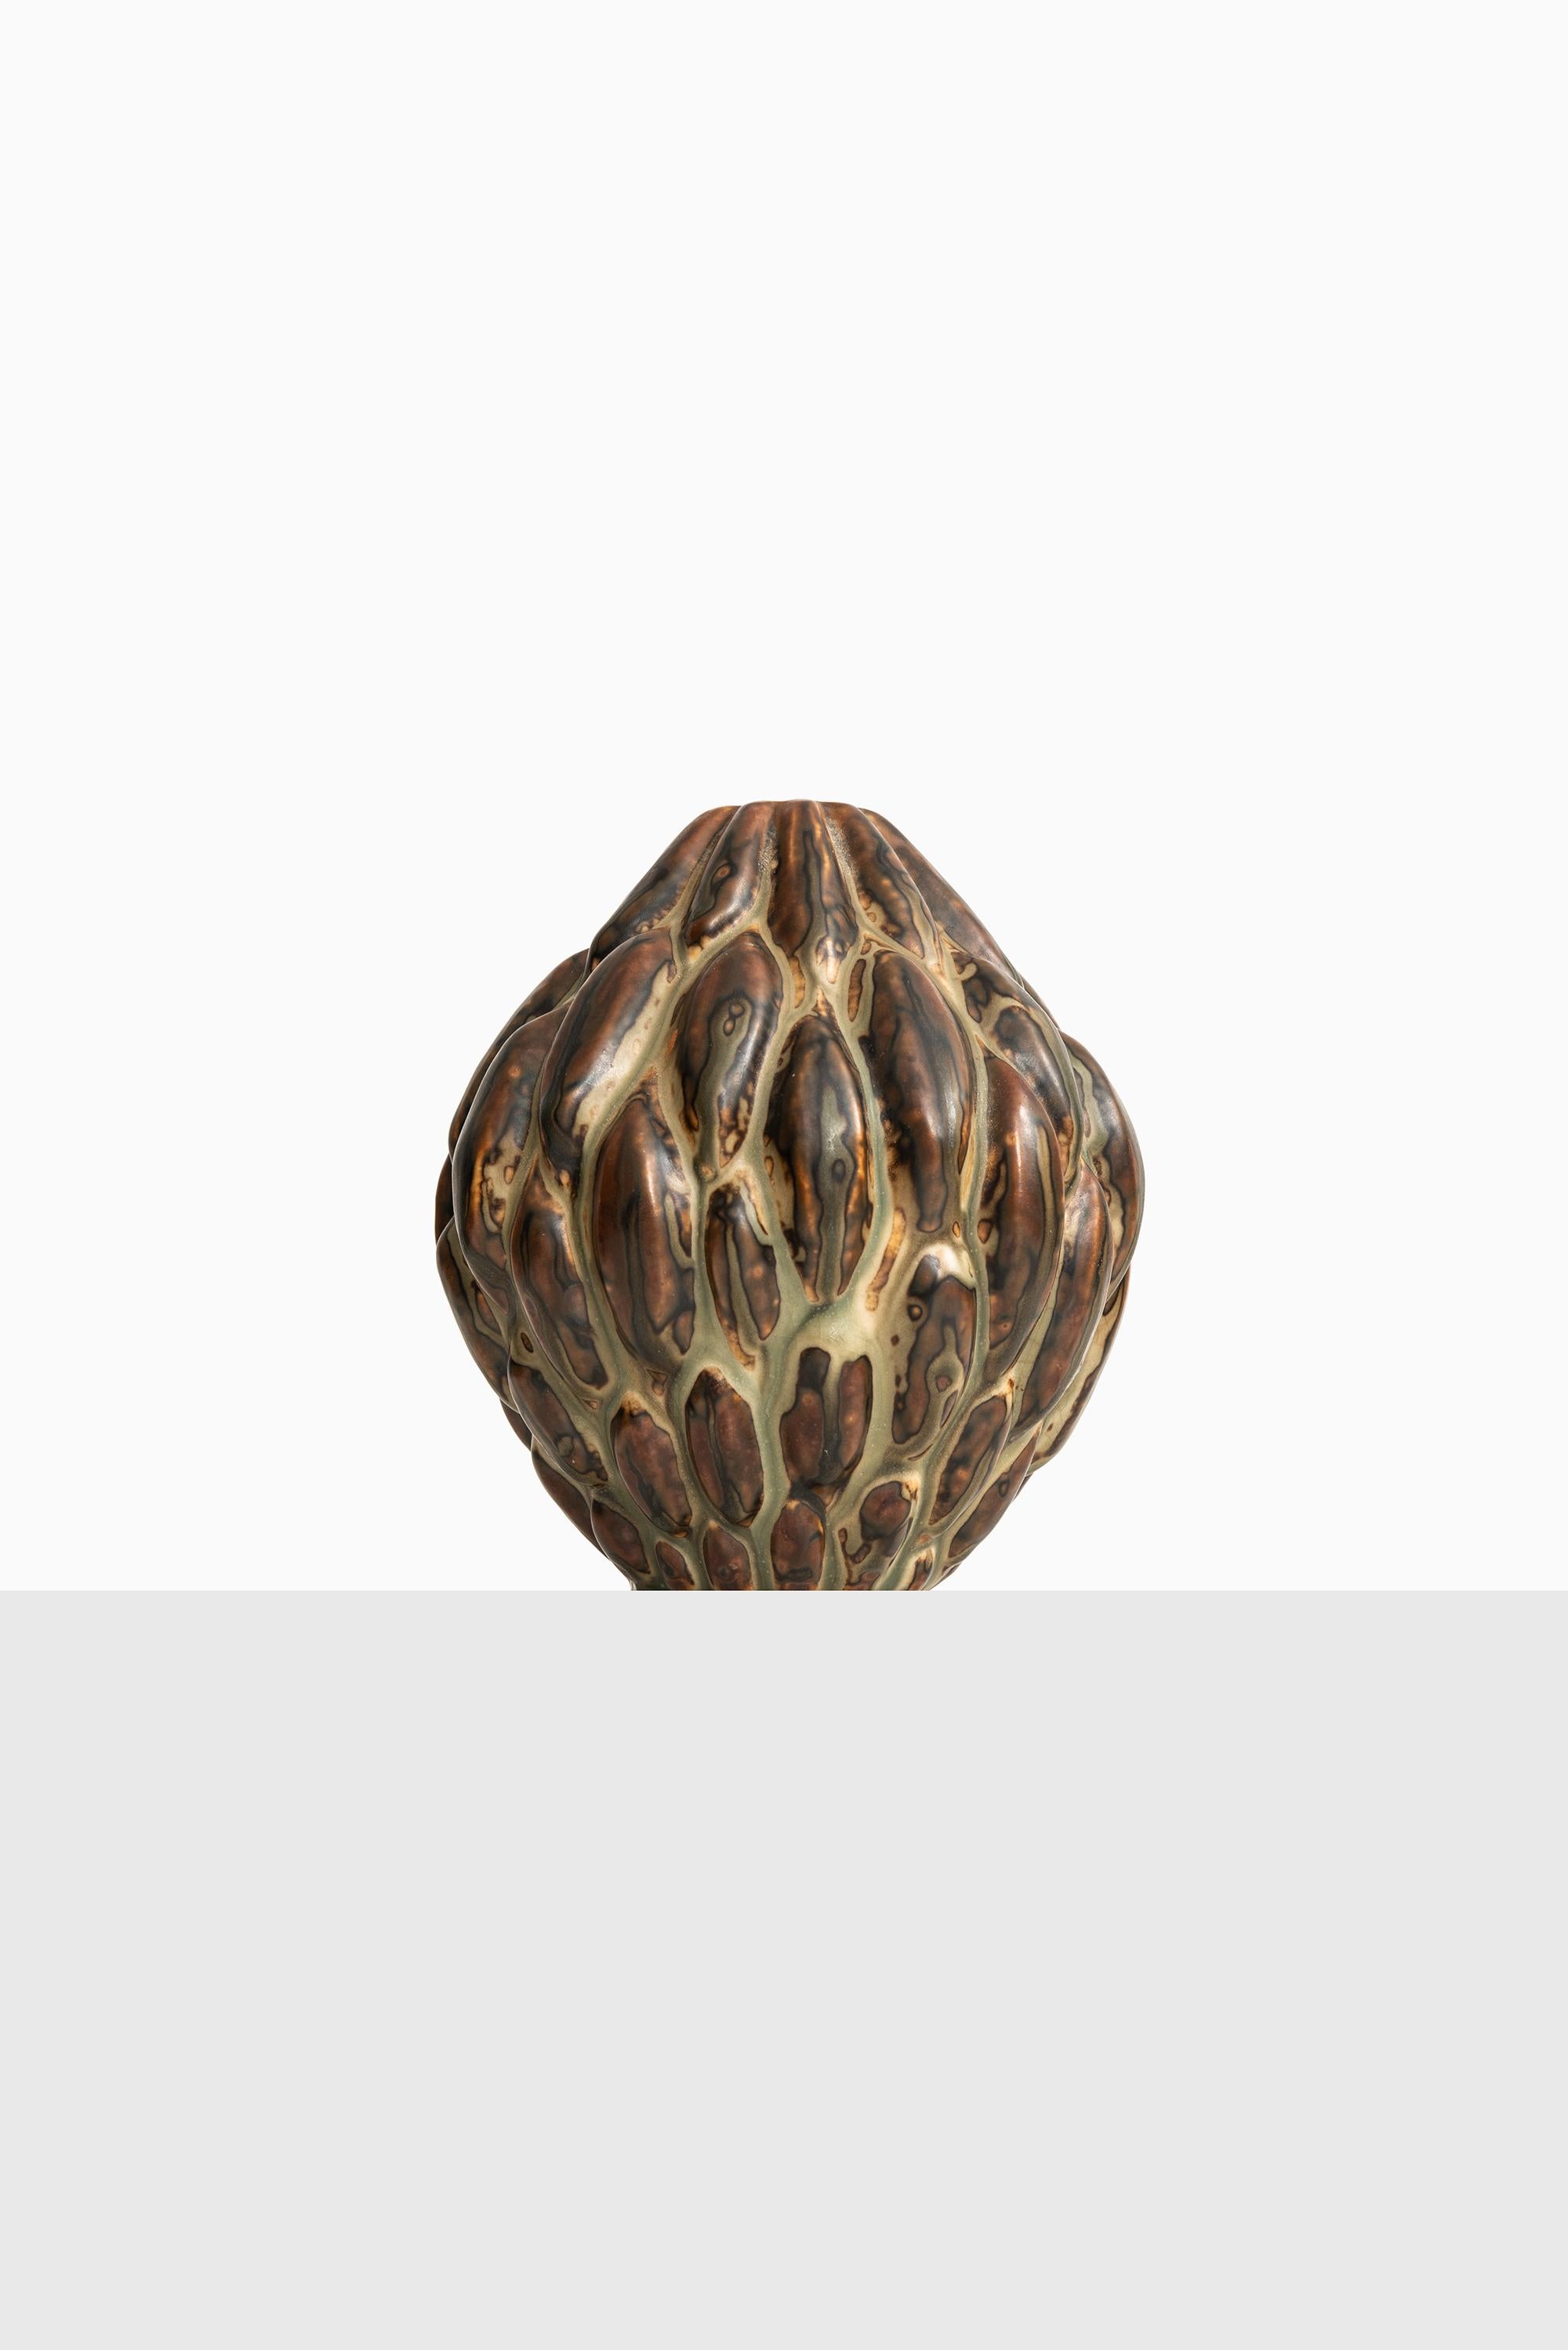 Rare ceramic vase designed by Axel Salto. Produced for Royal Copenhagen in Denmark.